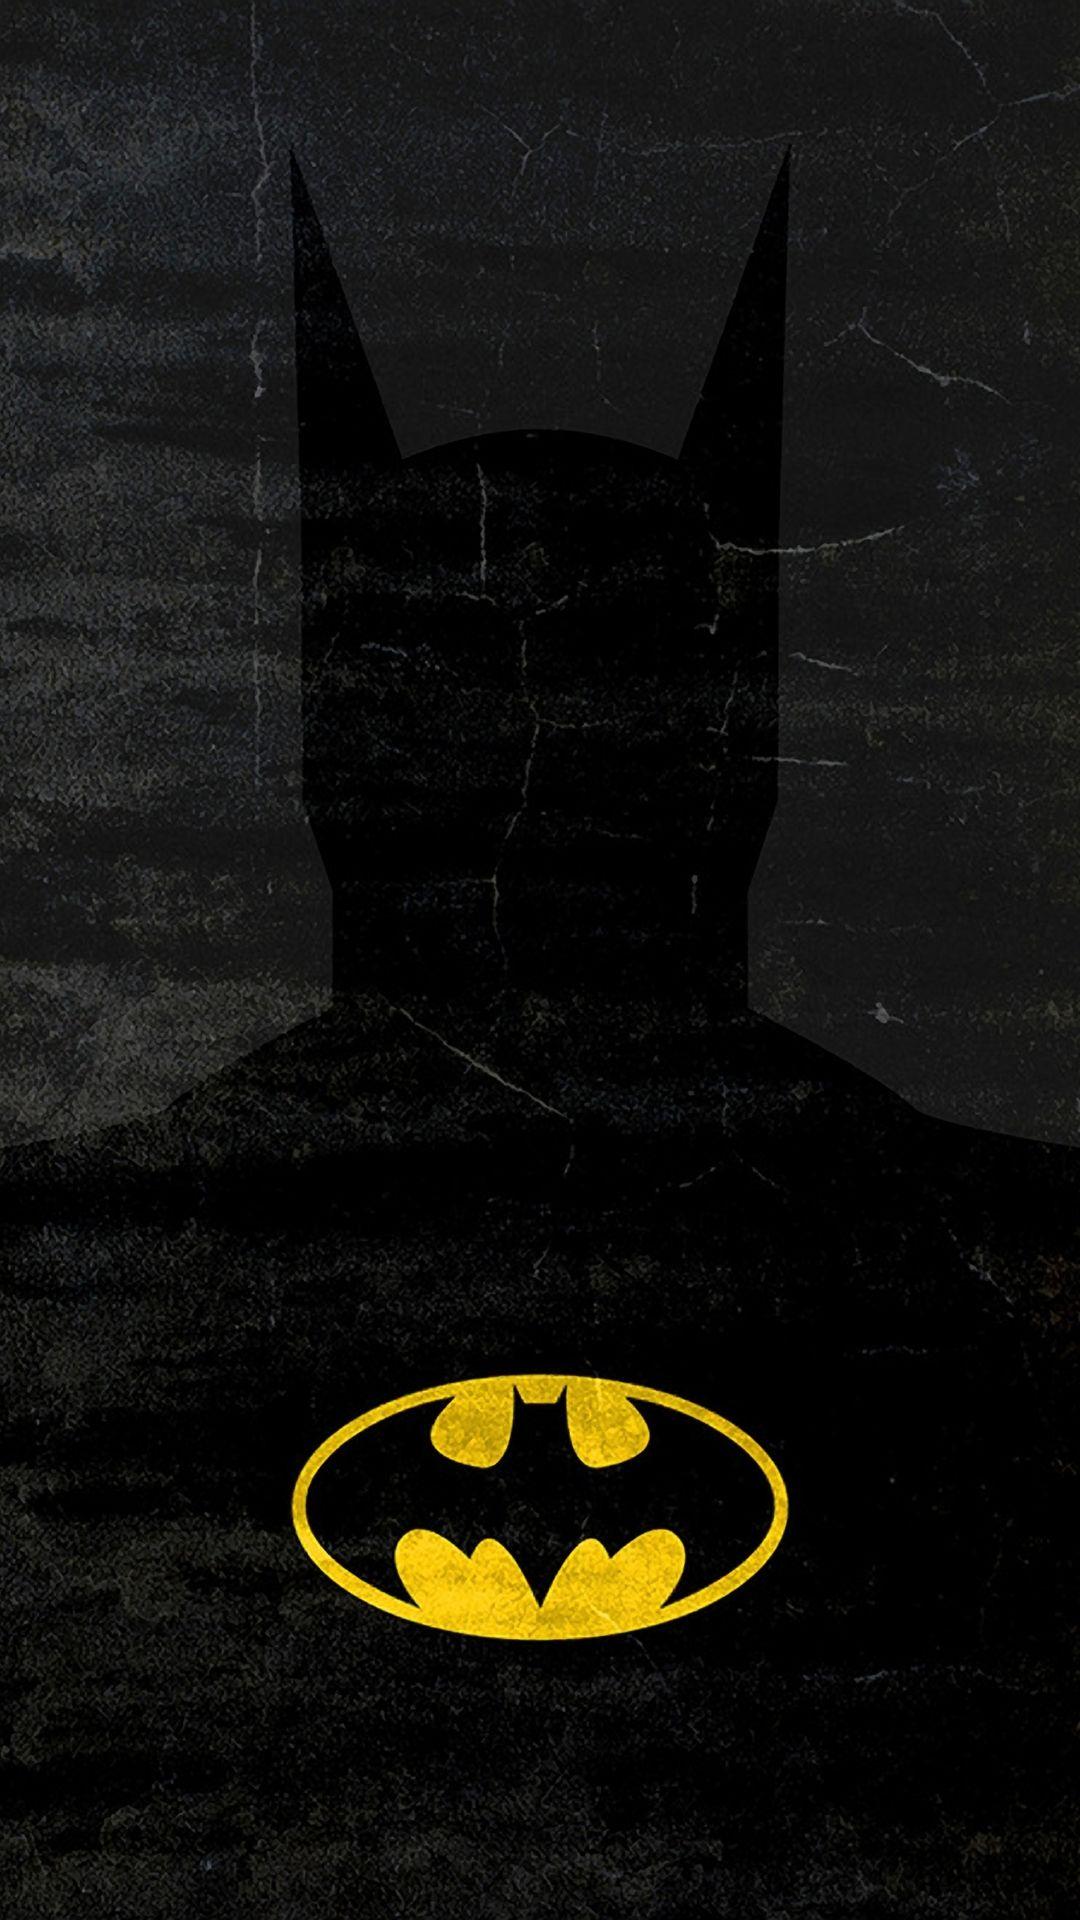 Batman VS Superman Movie Fight iPhone 7 wallpaper - iPhone7wallpapers.co